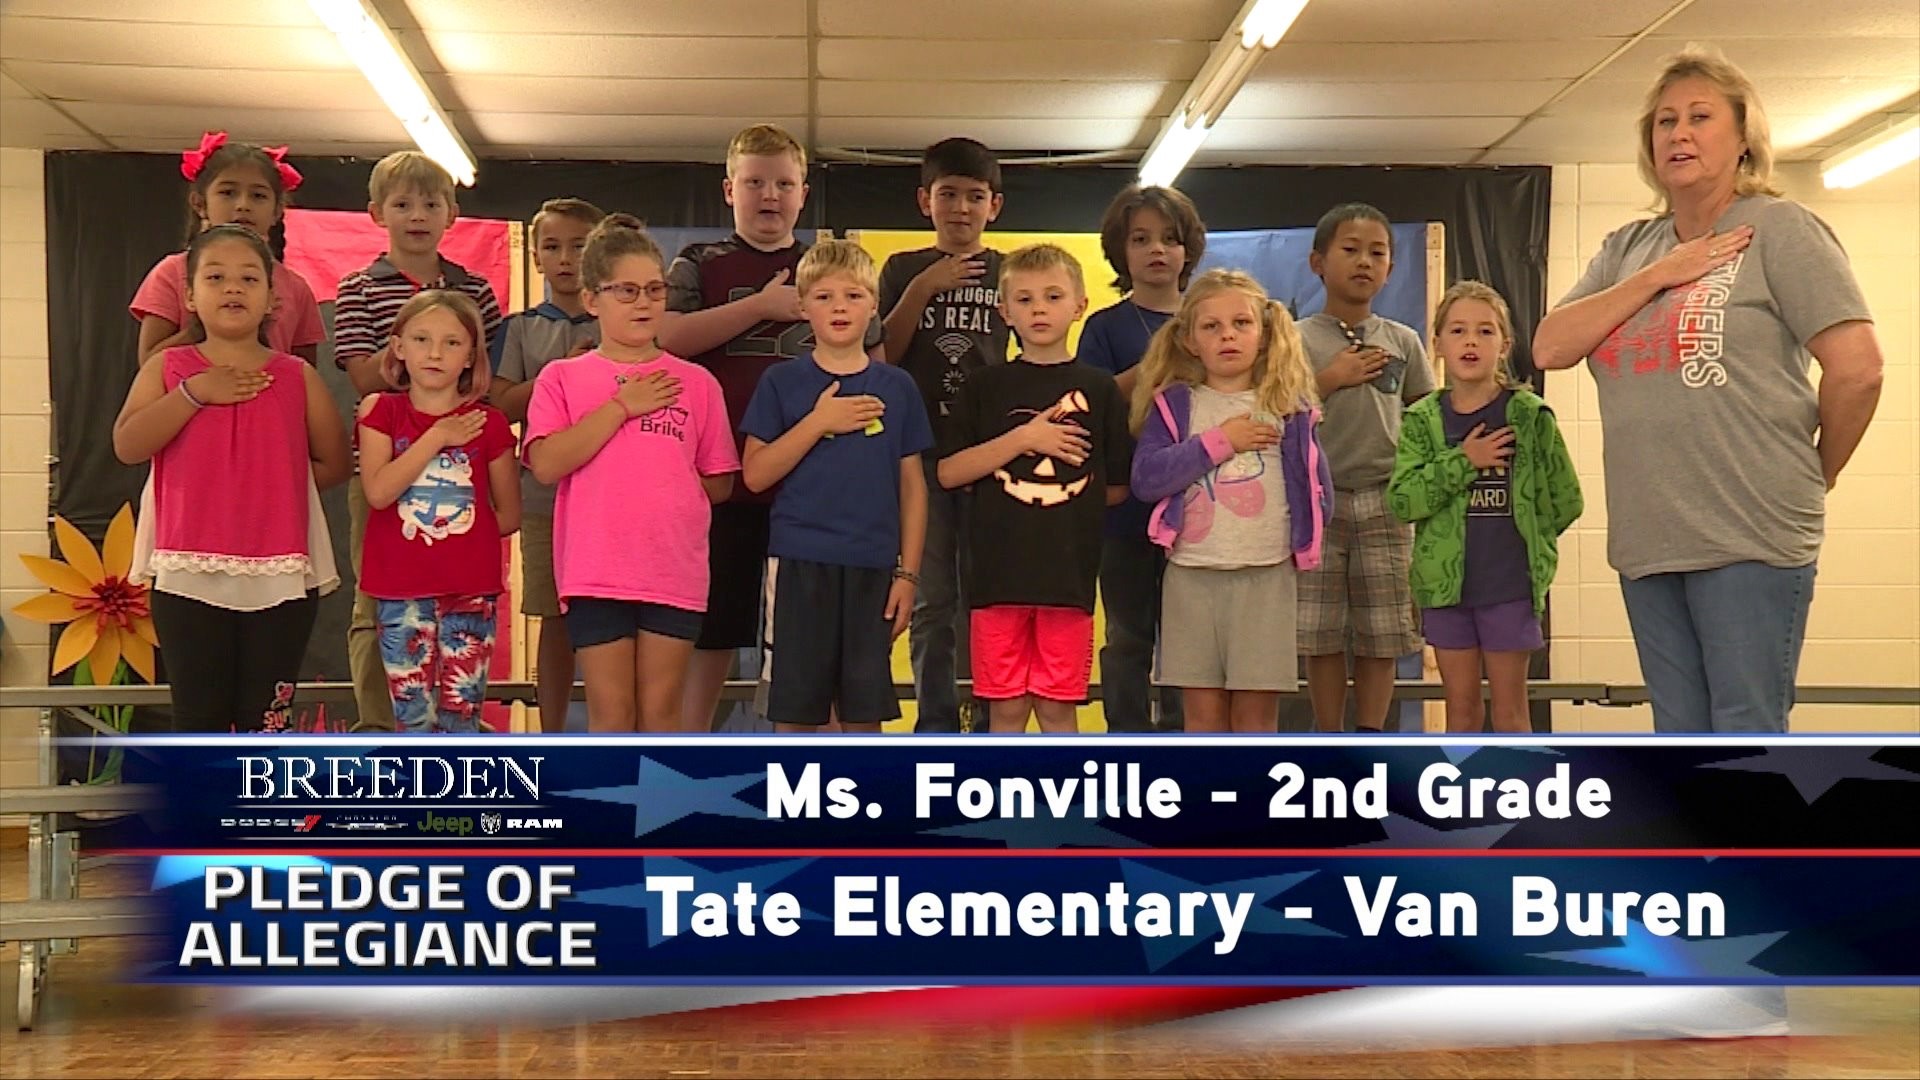 Ms. Fonville- 2nd Grade Tate Elementary